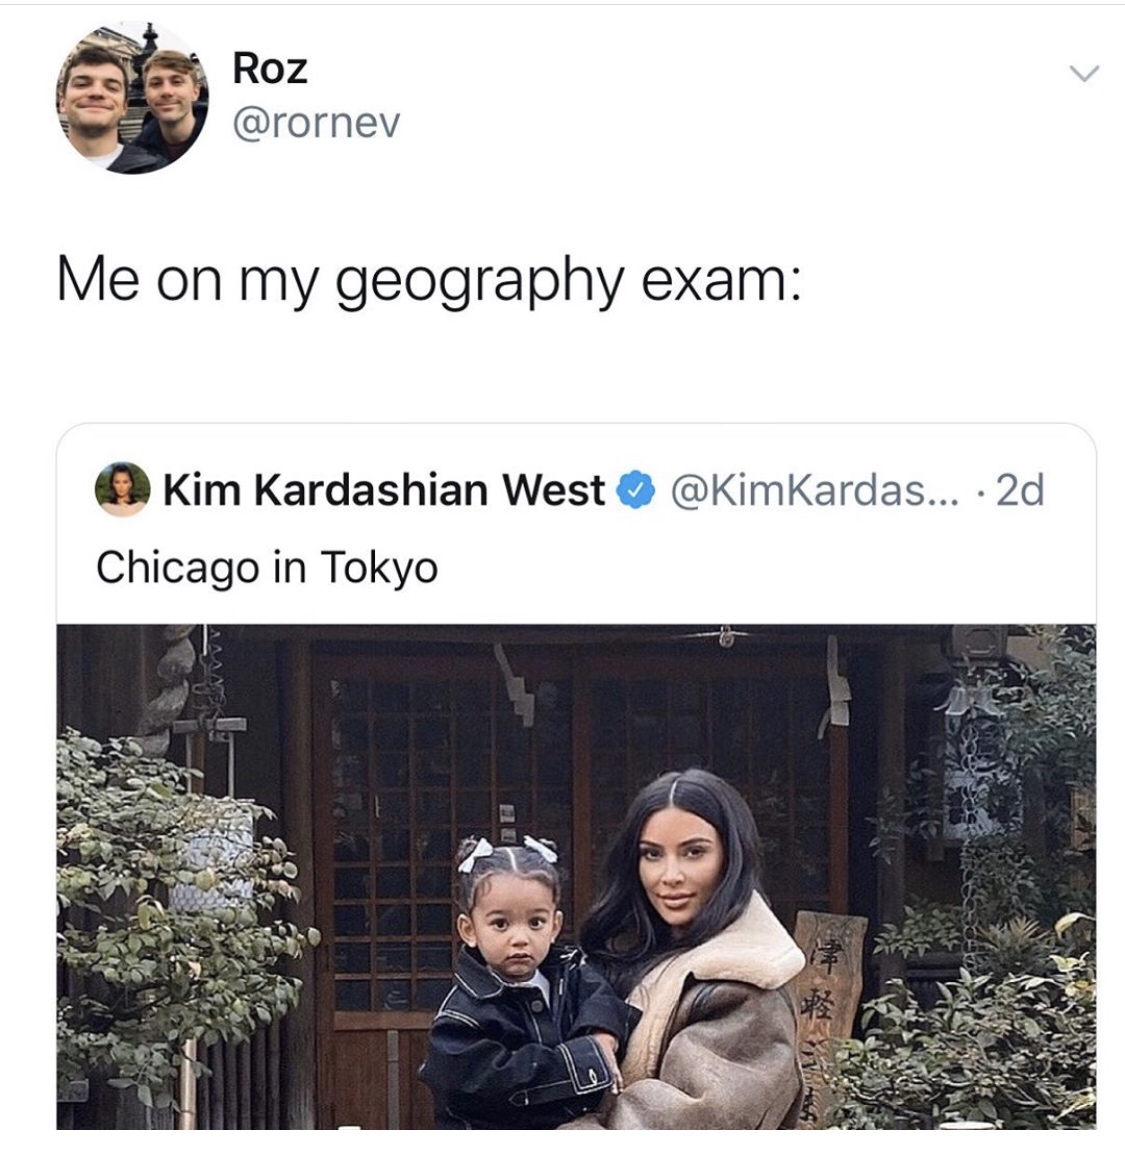 friendship - Roz Roz Me on my geography exam Kim Kardashian West Chicago in Tokyo ... 2d